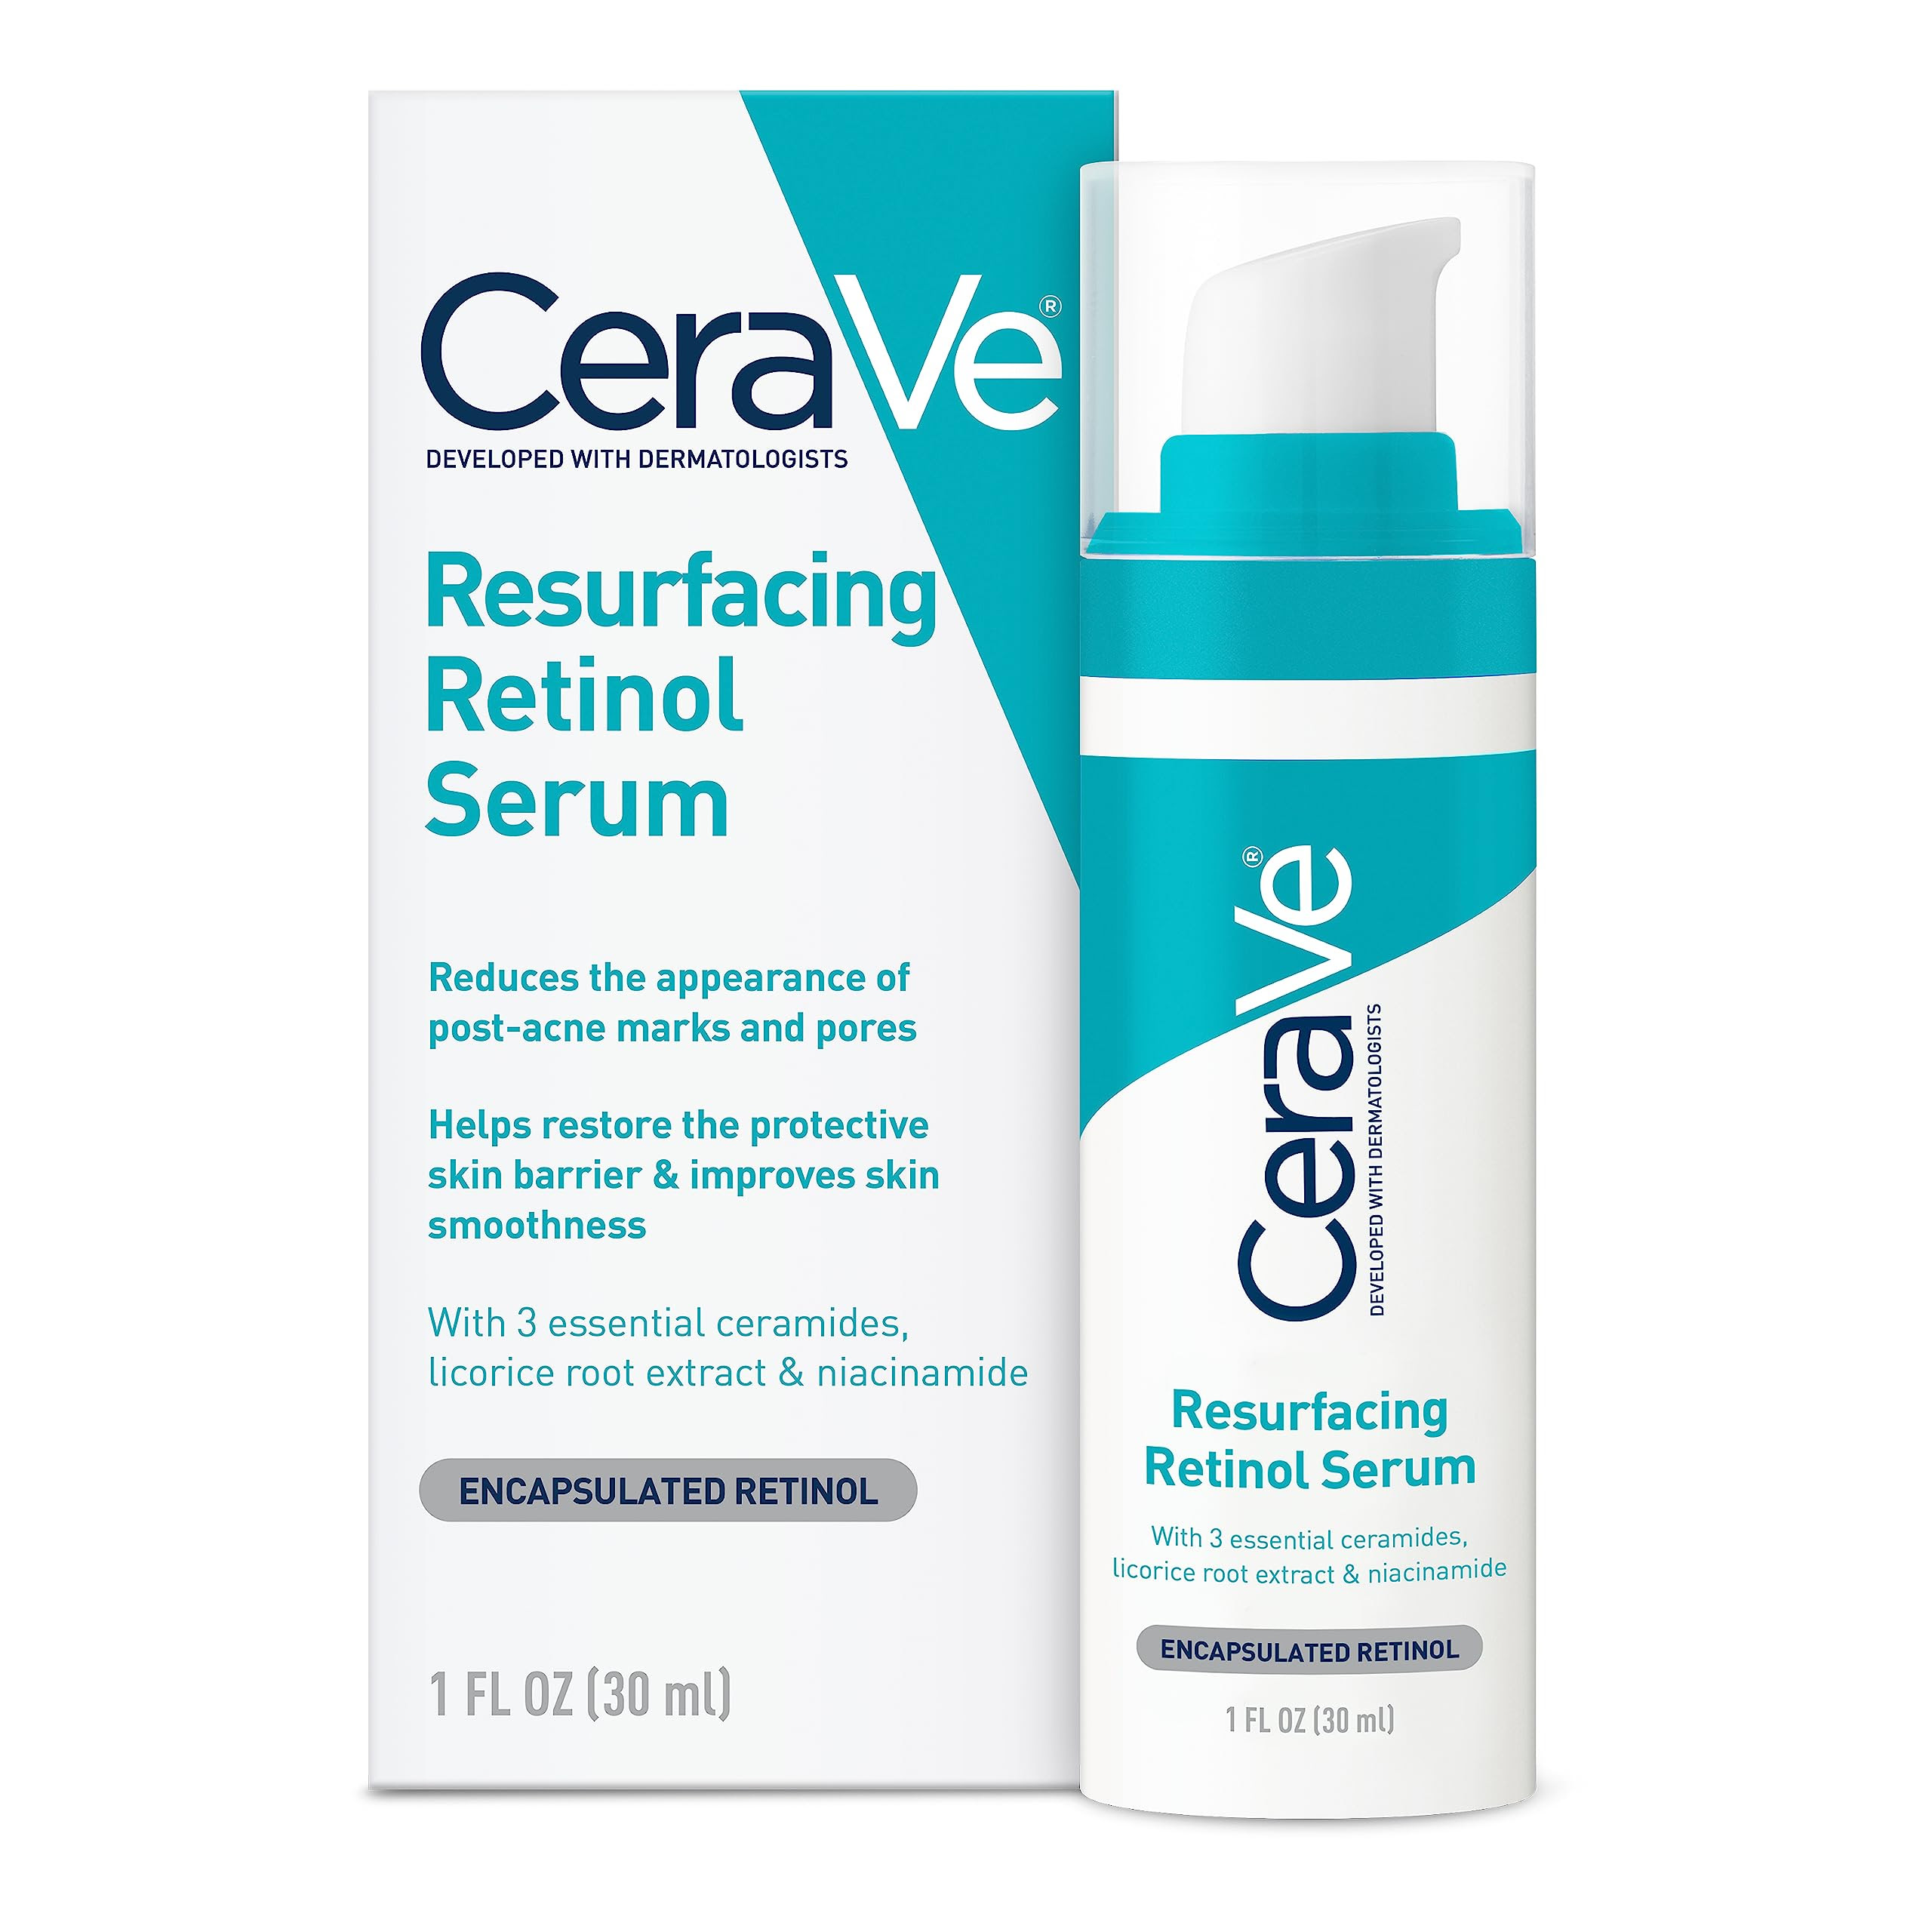 CeraVe Retinol Serum